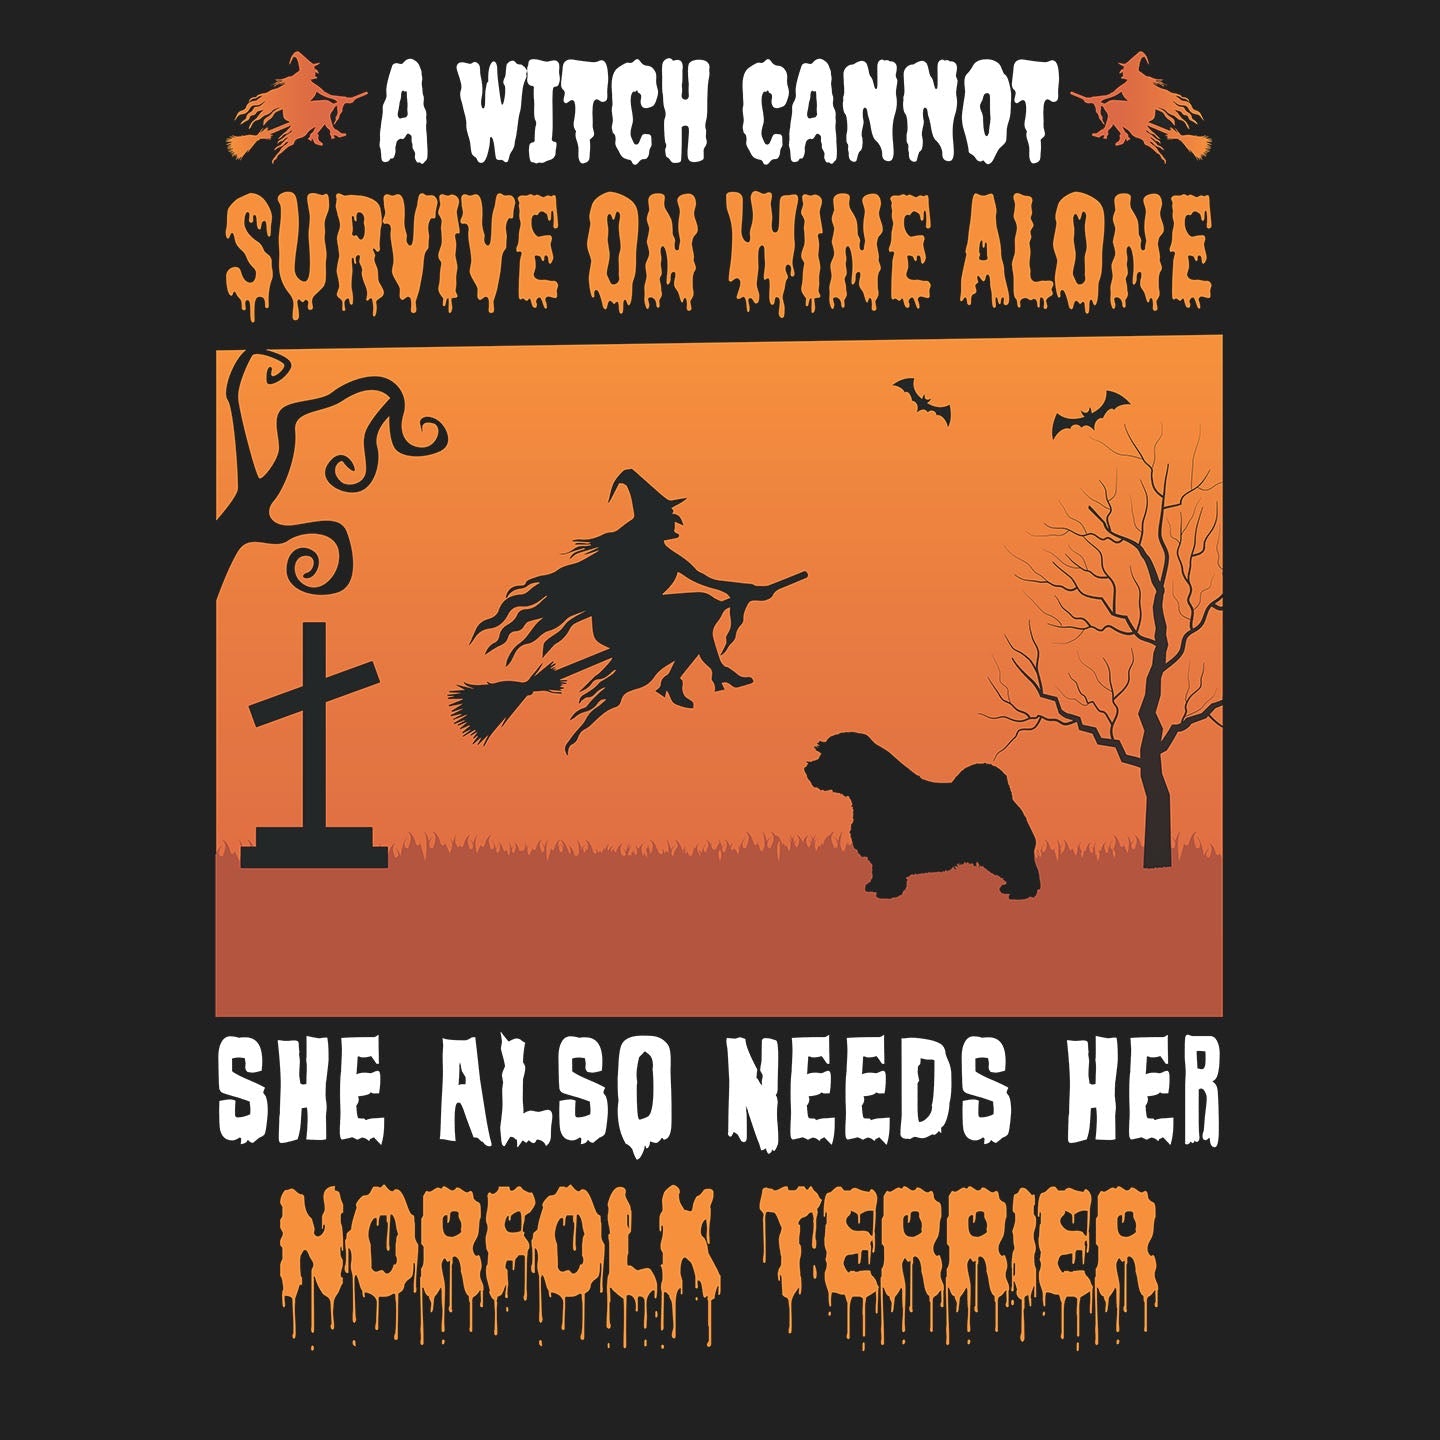 A Witch Needs Her Norfolk Terrier - Women's V-Neck T-Shirt